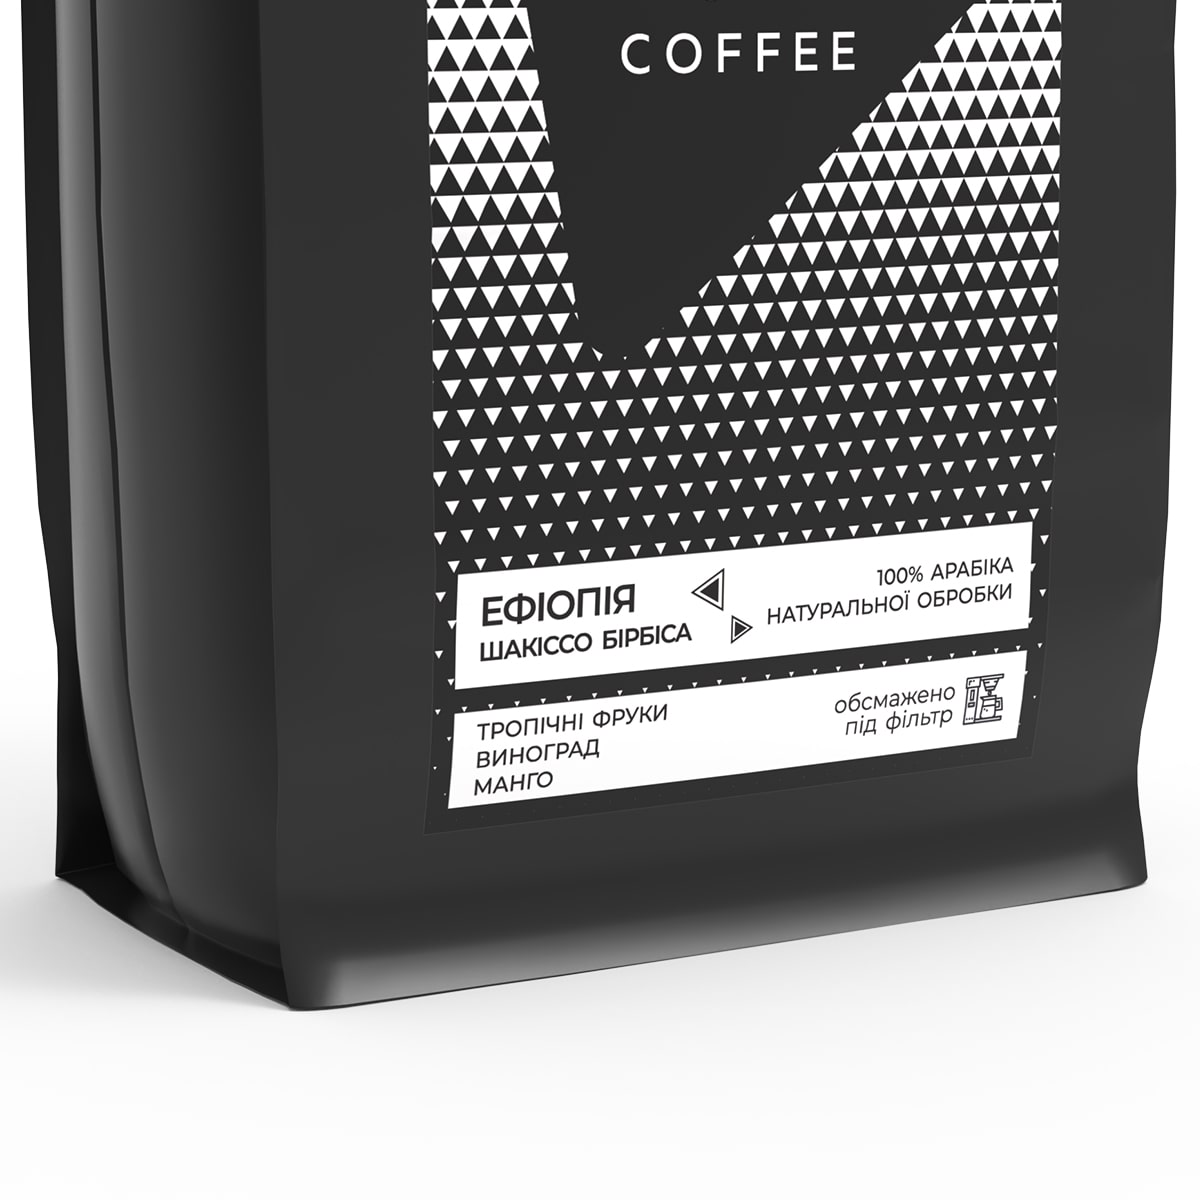 Кофе в зернах Bedoin Coffee Эфиопия Шакиссо Бирбиса 1 кг - фото 2